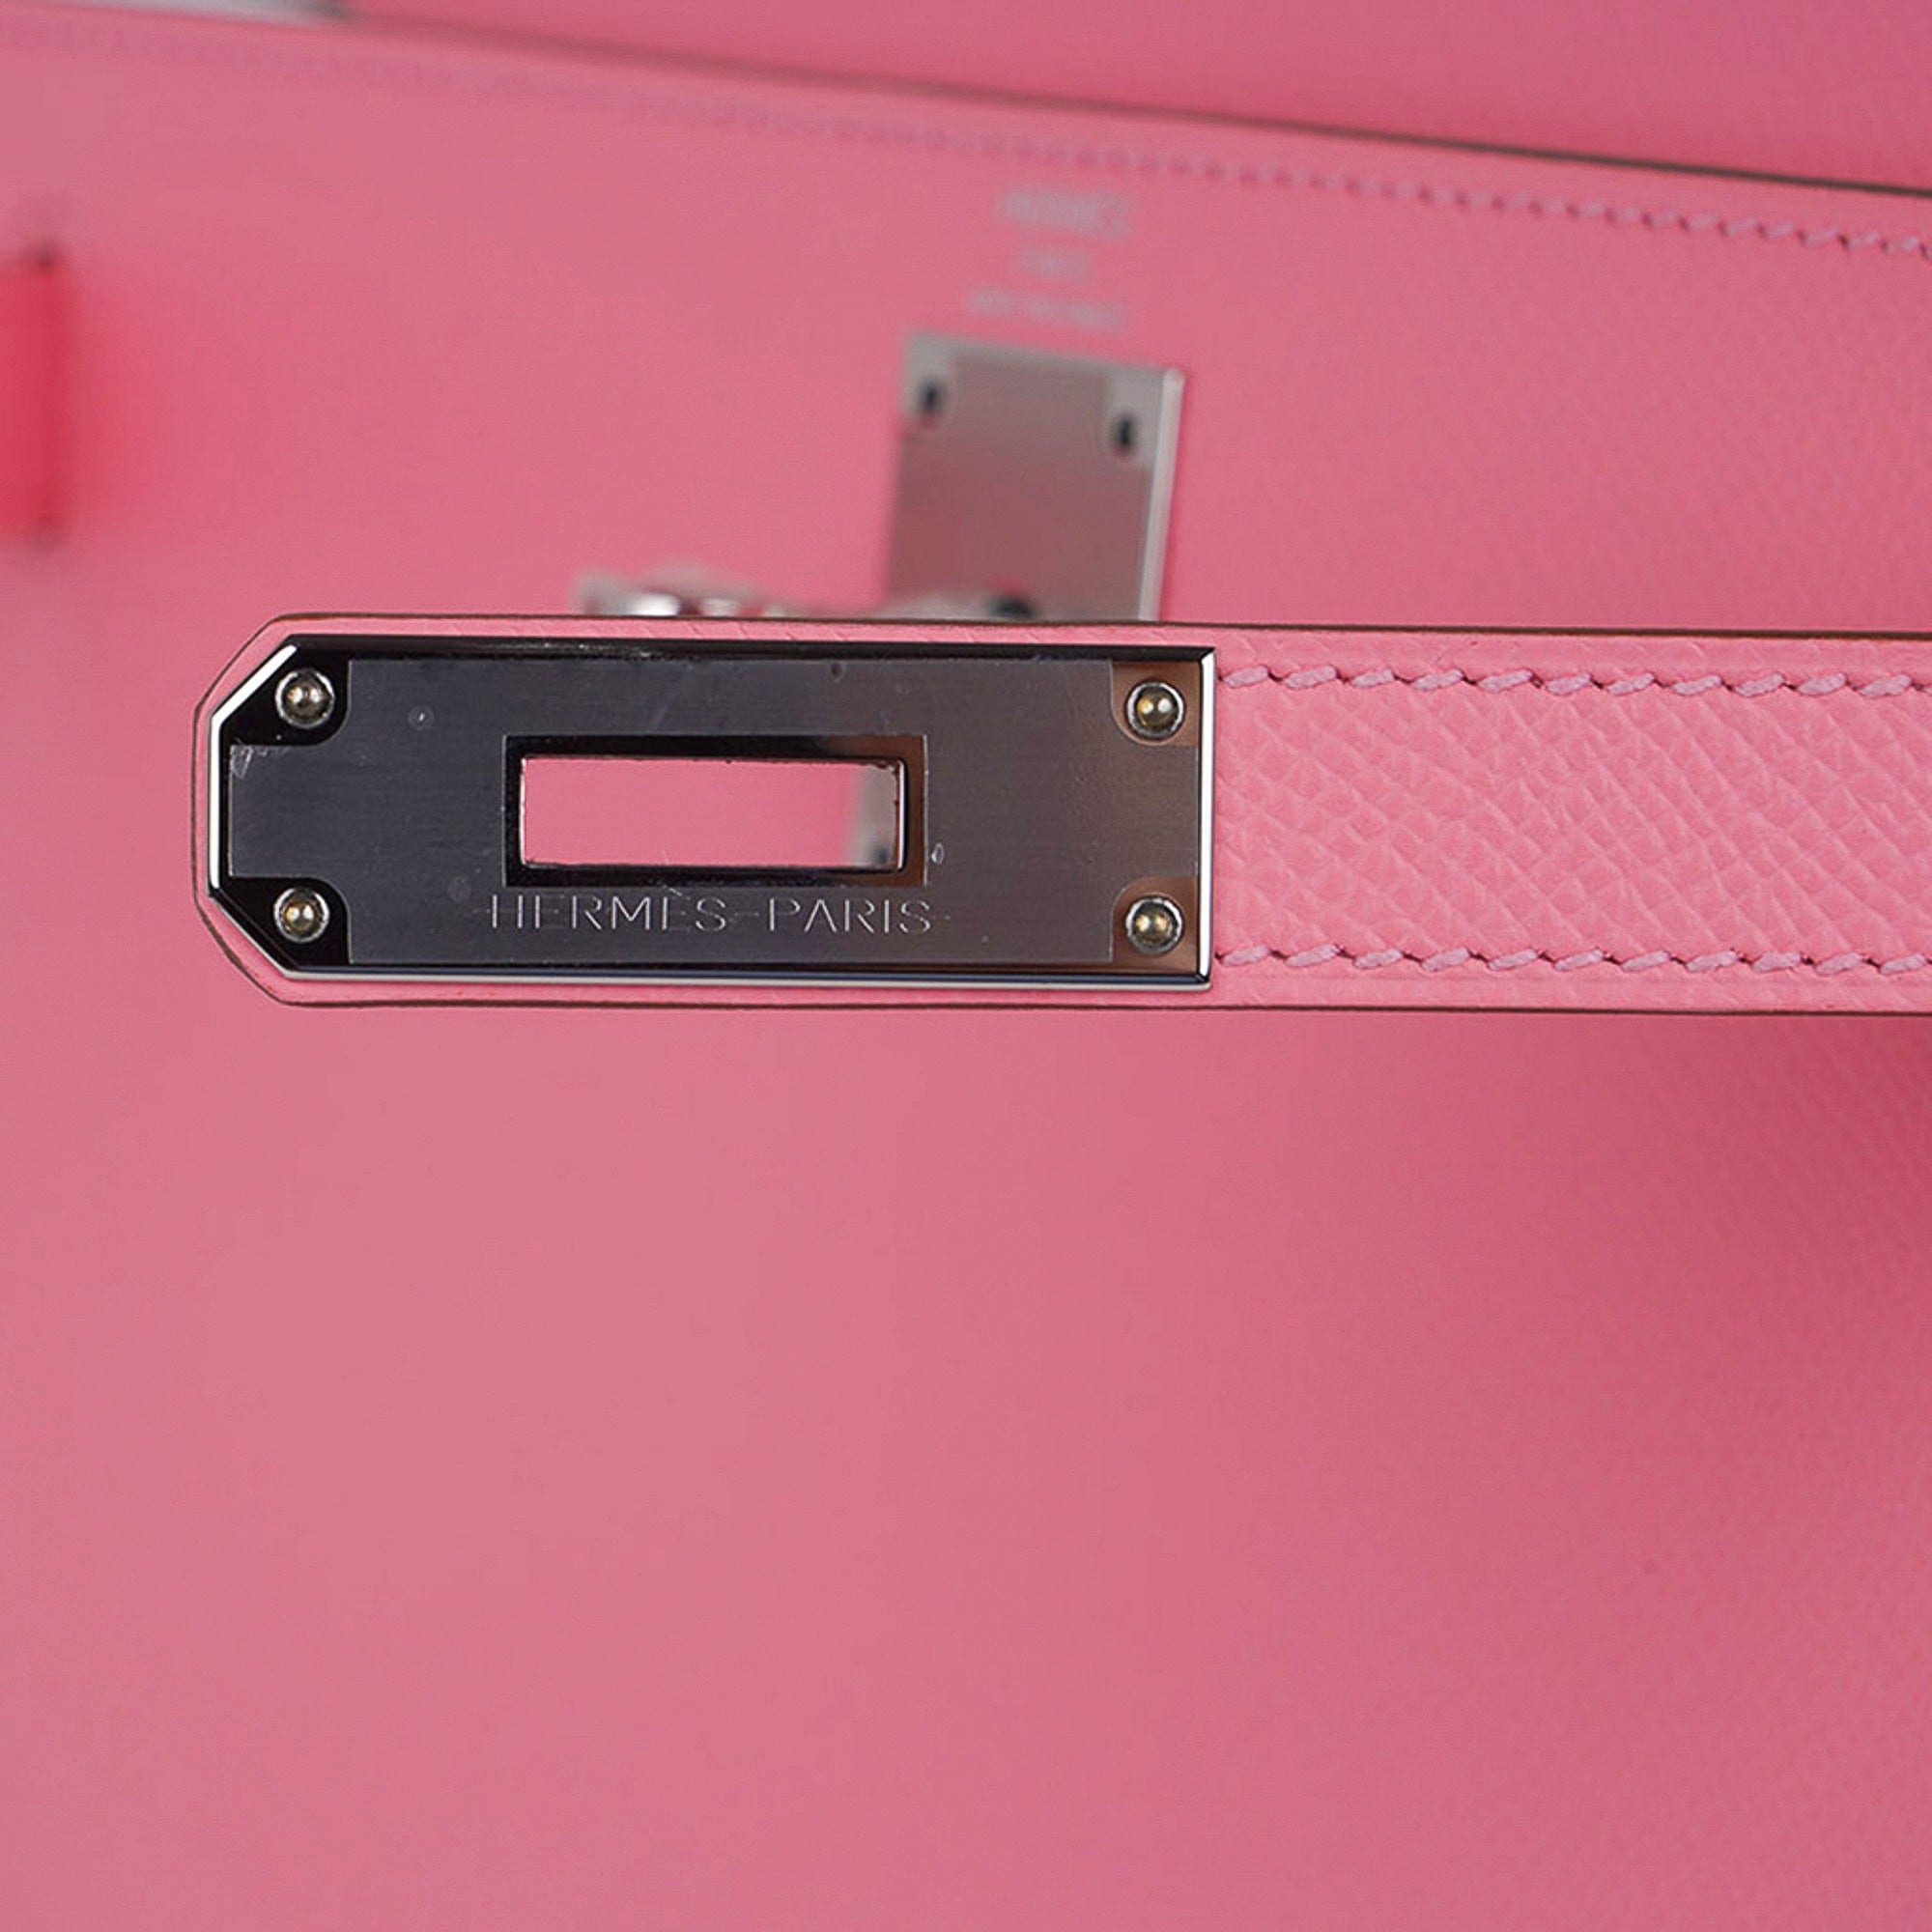 Hermes Kelly 25 Sellier Bag Pink Rose Confetti Palladium Hardware